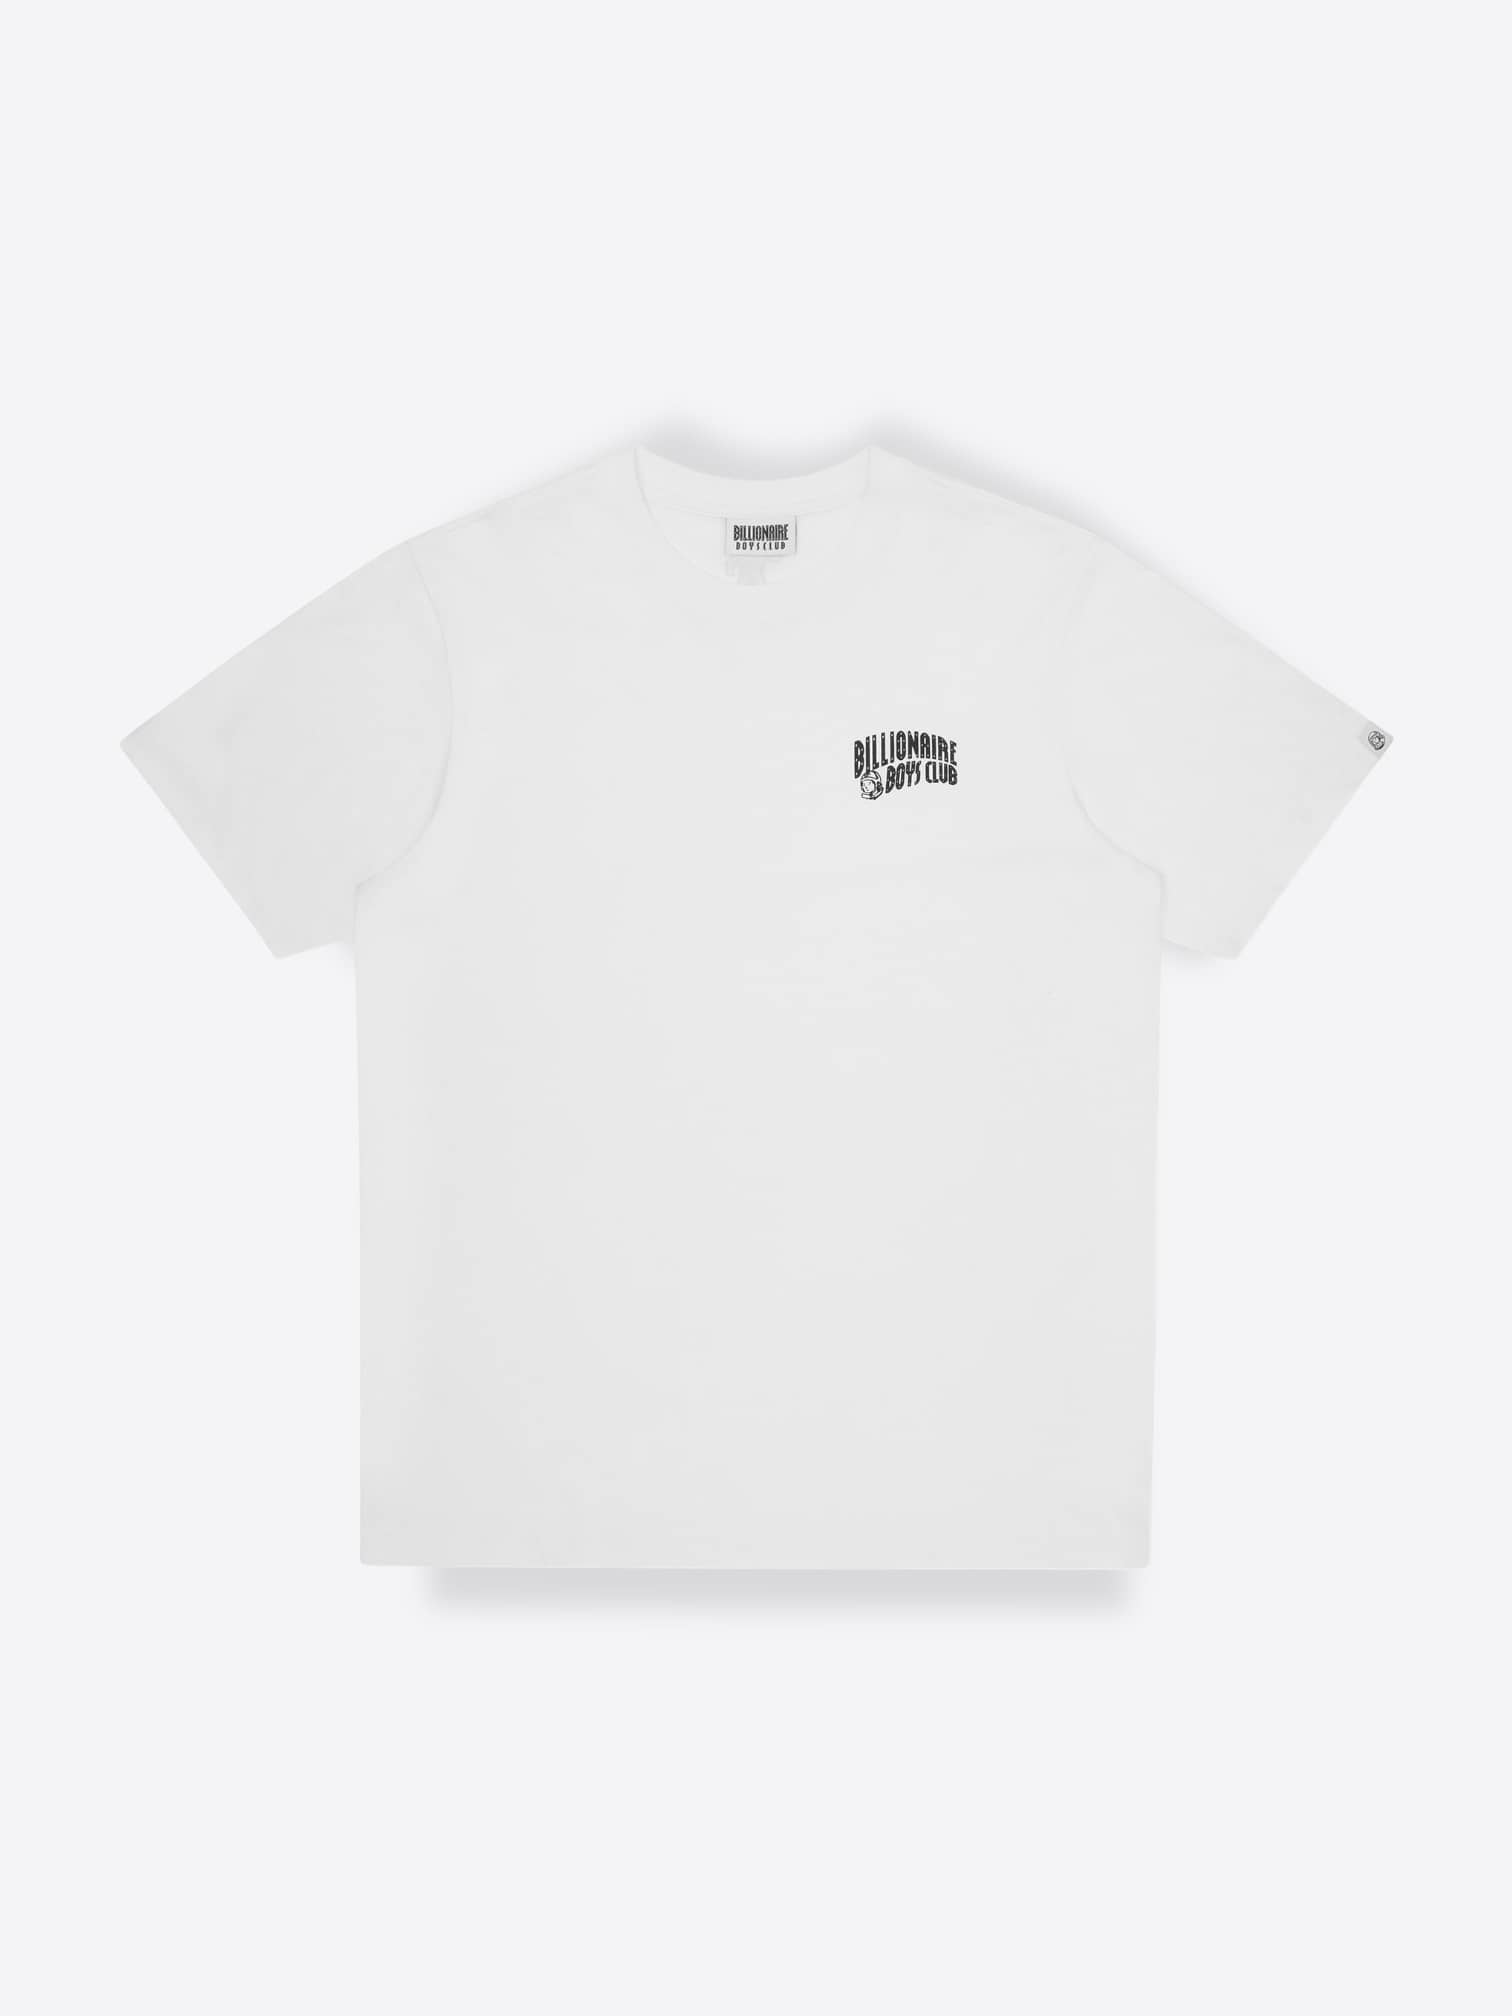 Billionaire Boys Club Small Arch Logo White T-shirt 